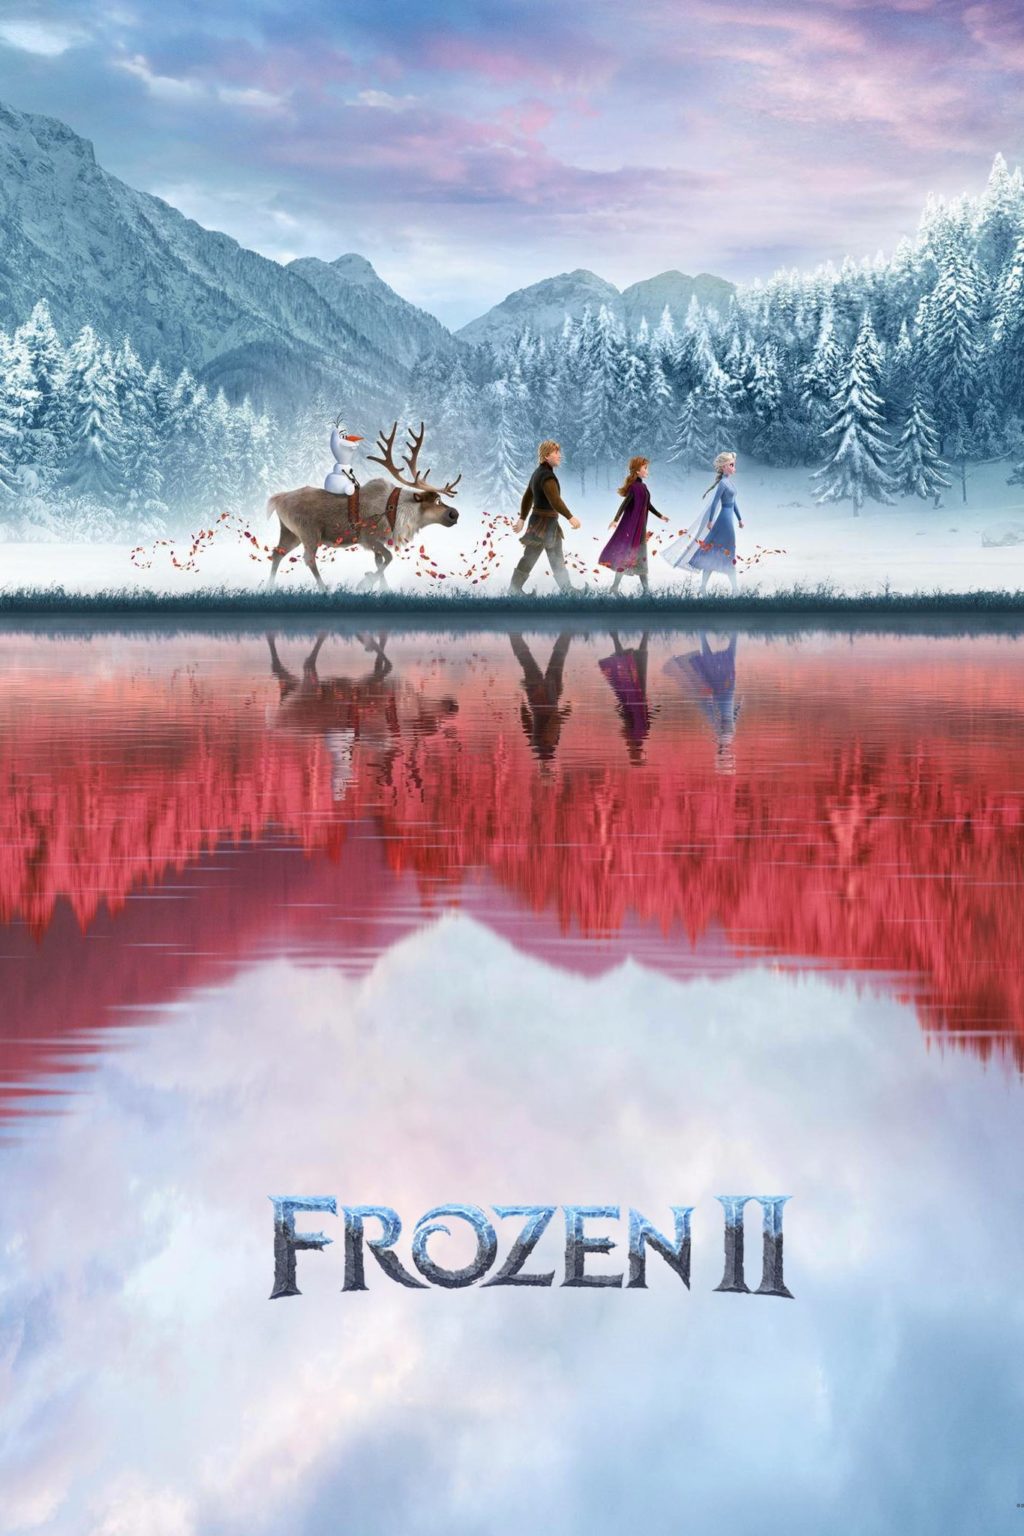 watch-frozen-ii-full-movie-online-for-free-in-hd-quality